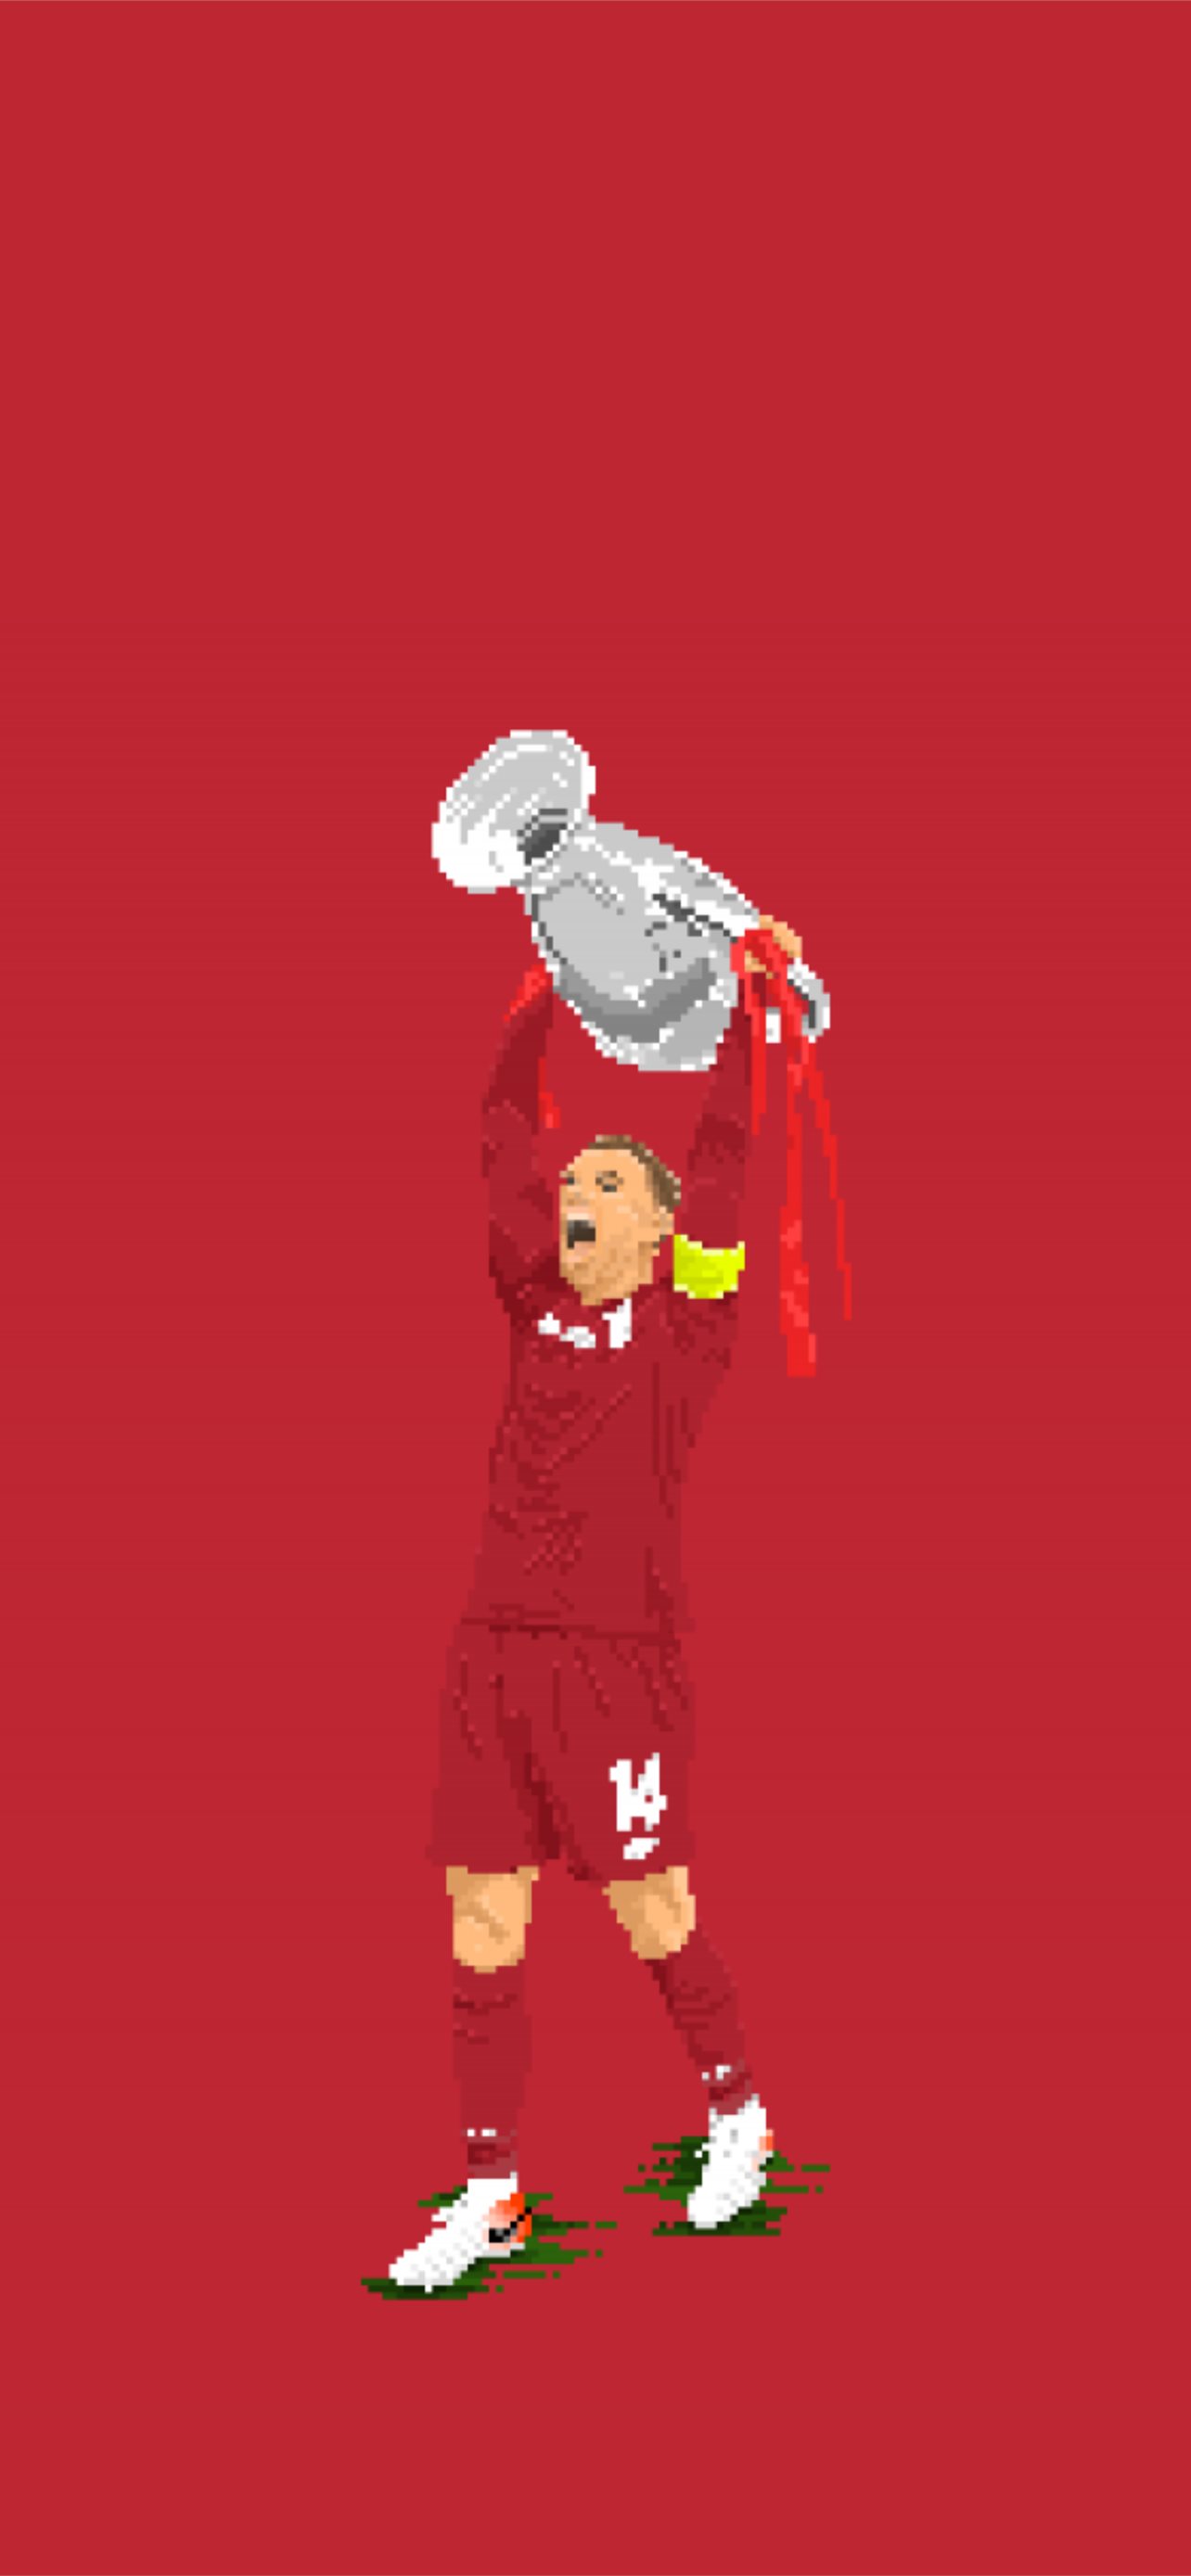 Best Liverpool fc iPhone HD Wallpaper